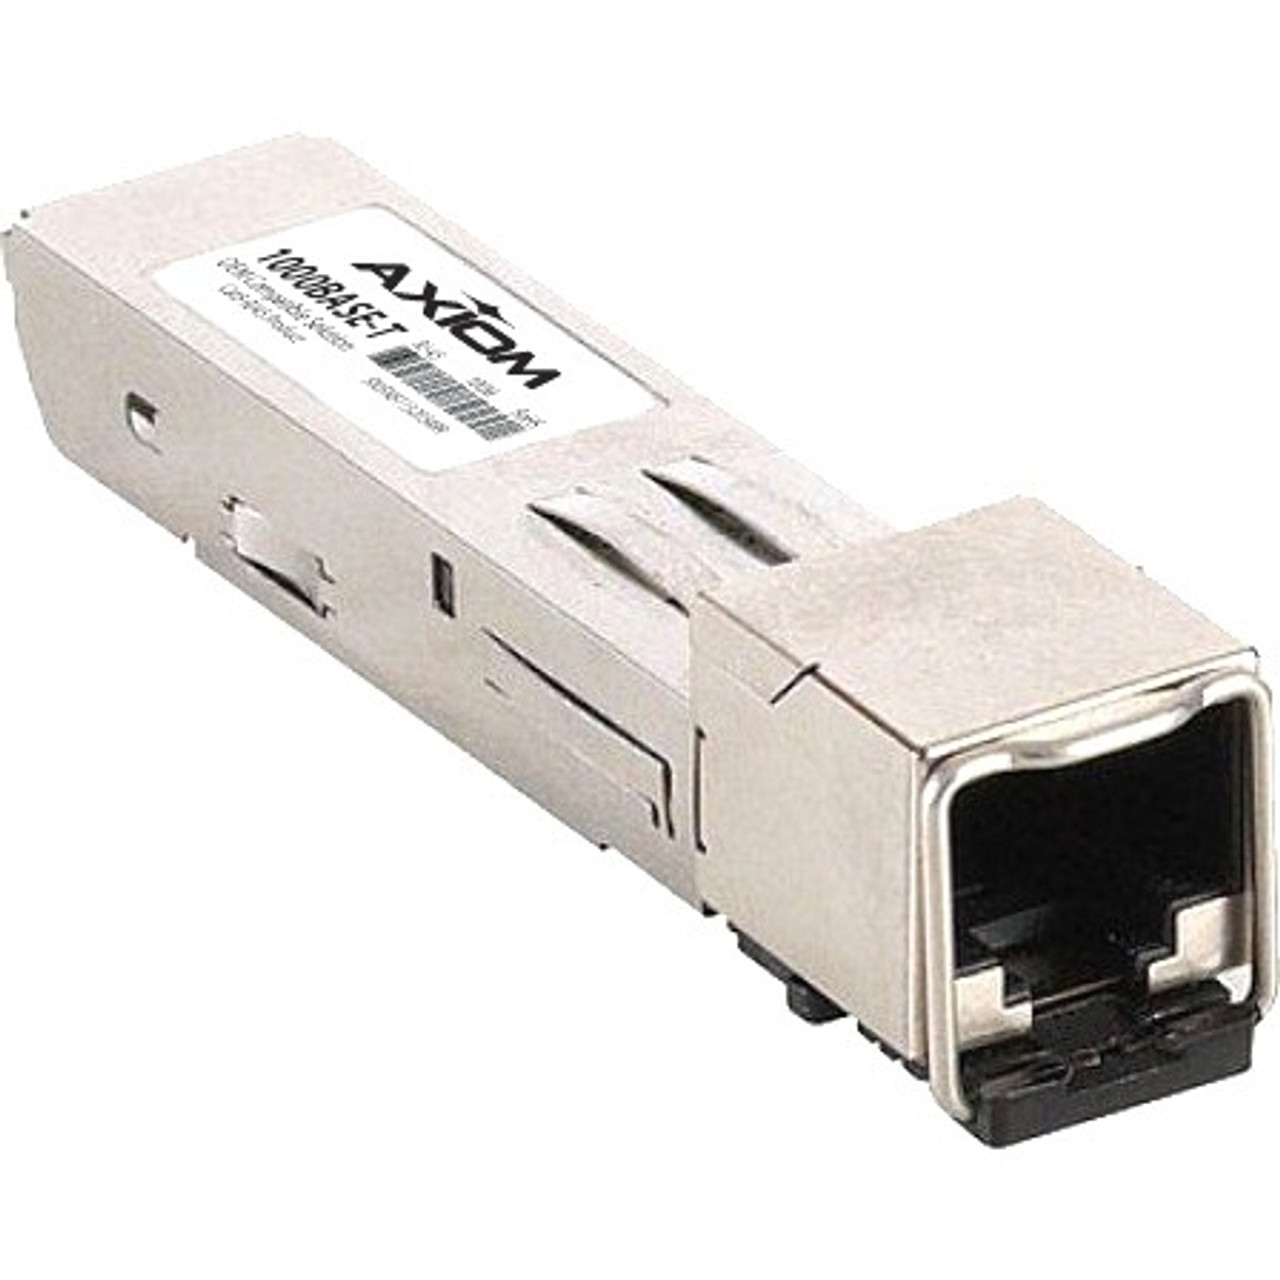 45W4475-AX Axiom 1.25Gbps 1000Base-T 100m Copper RJ-45 Connector SFP Transceiver Module for IBM 45W4475